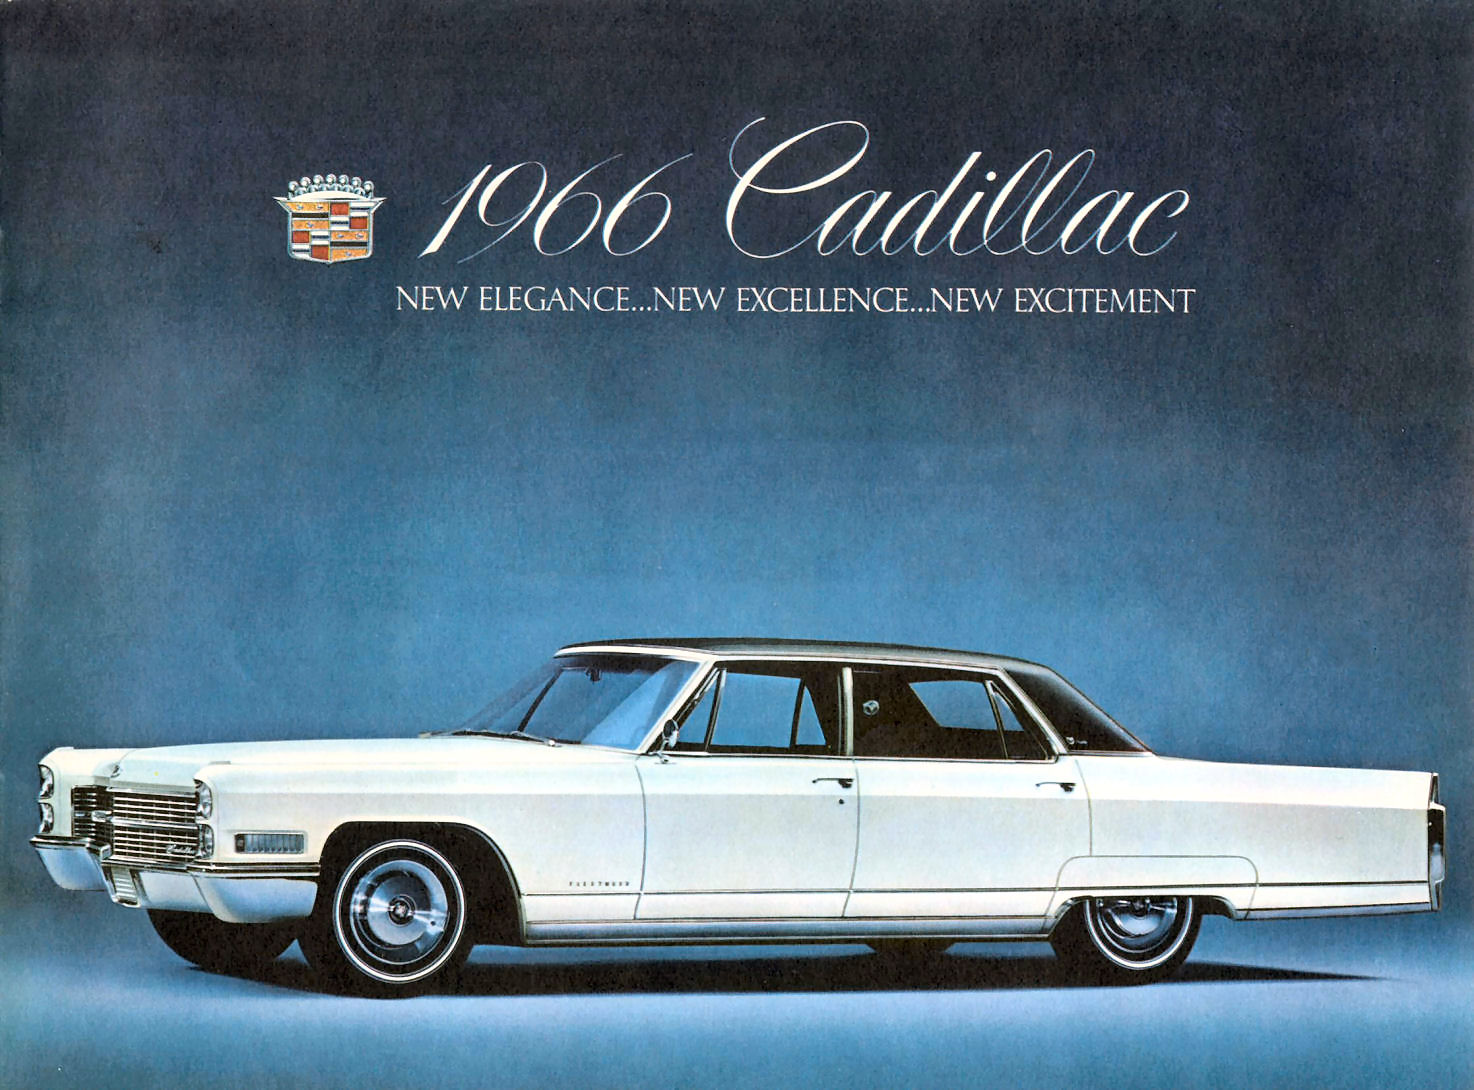 1966 Cadillac Brochure